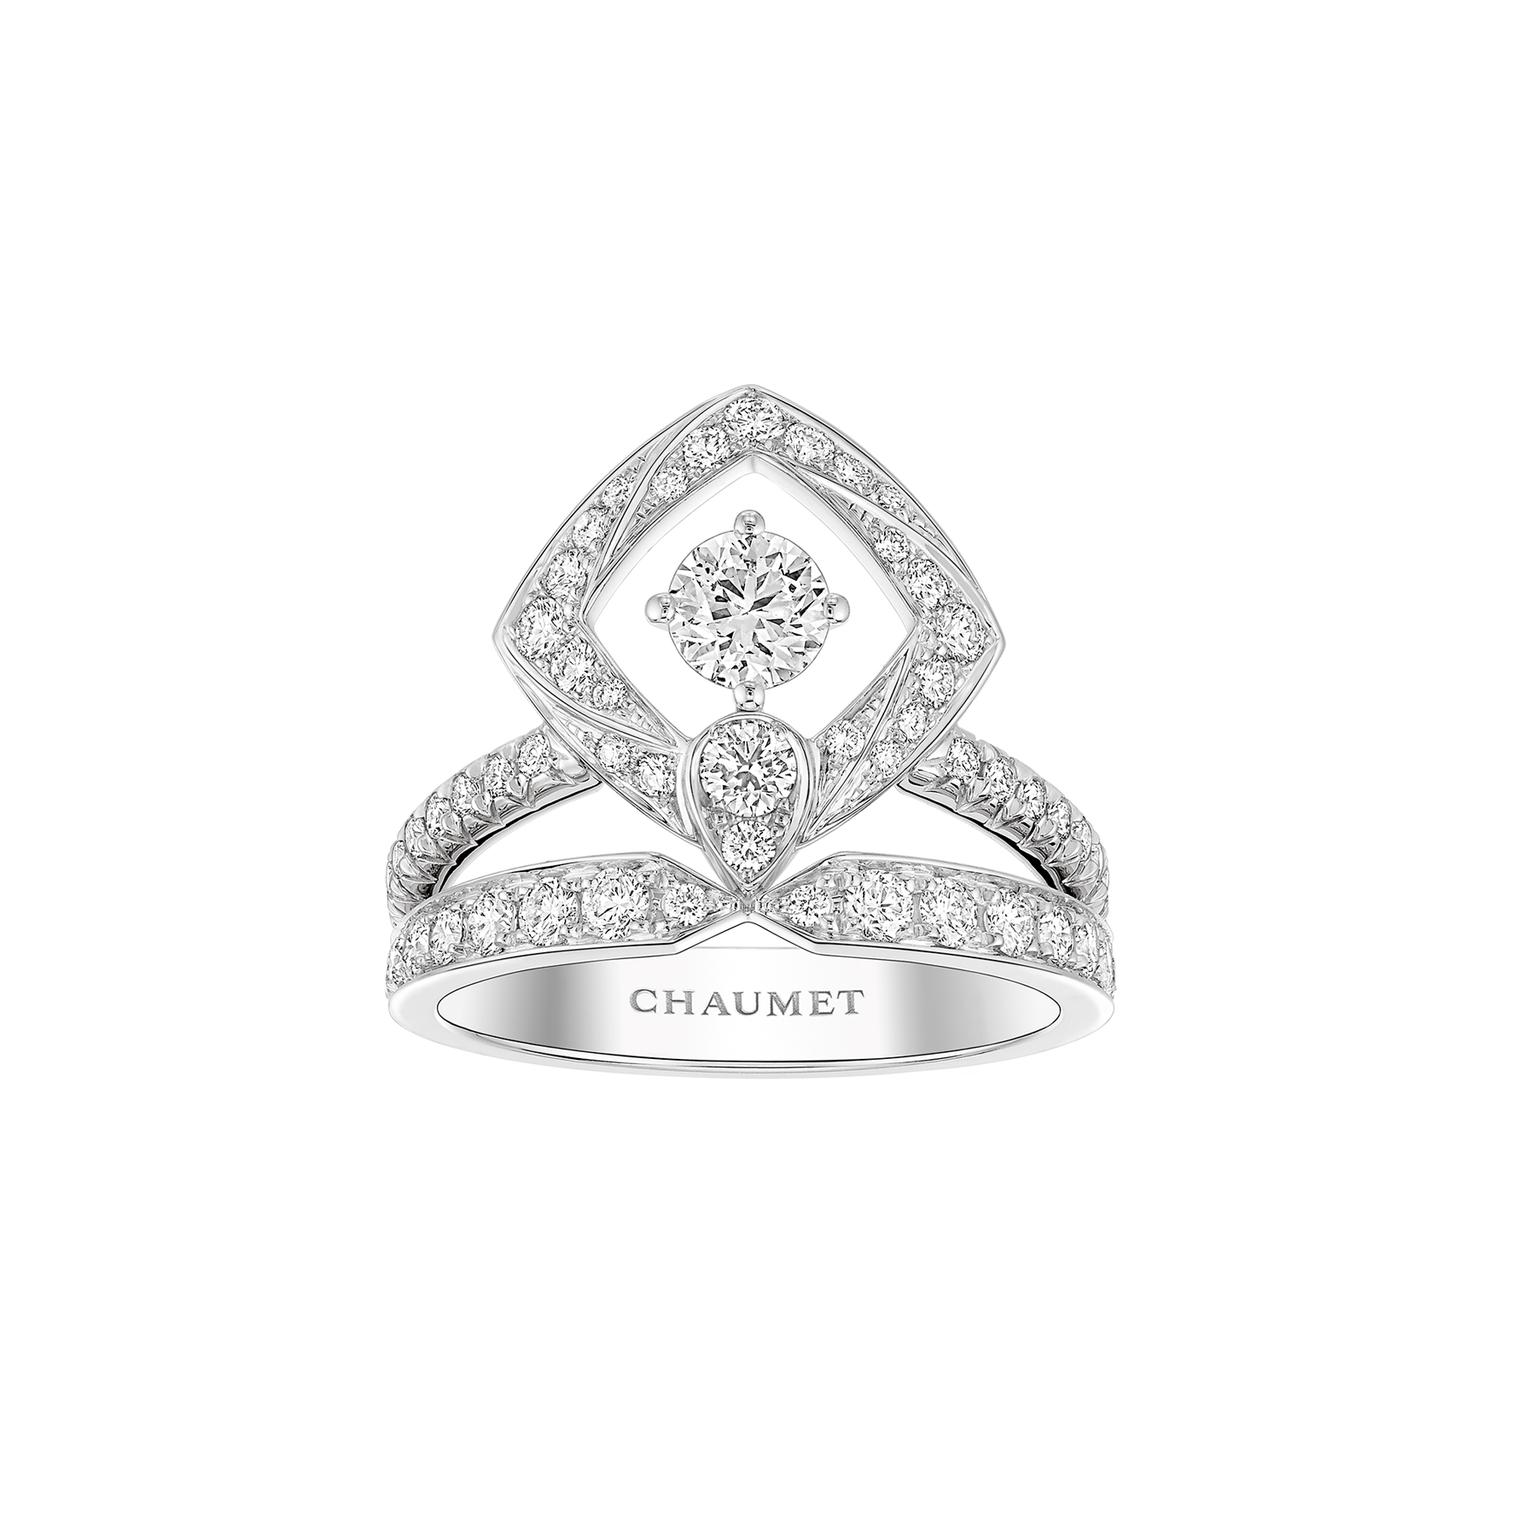 Chaumet Josephine Eclat Floral diamond ring